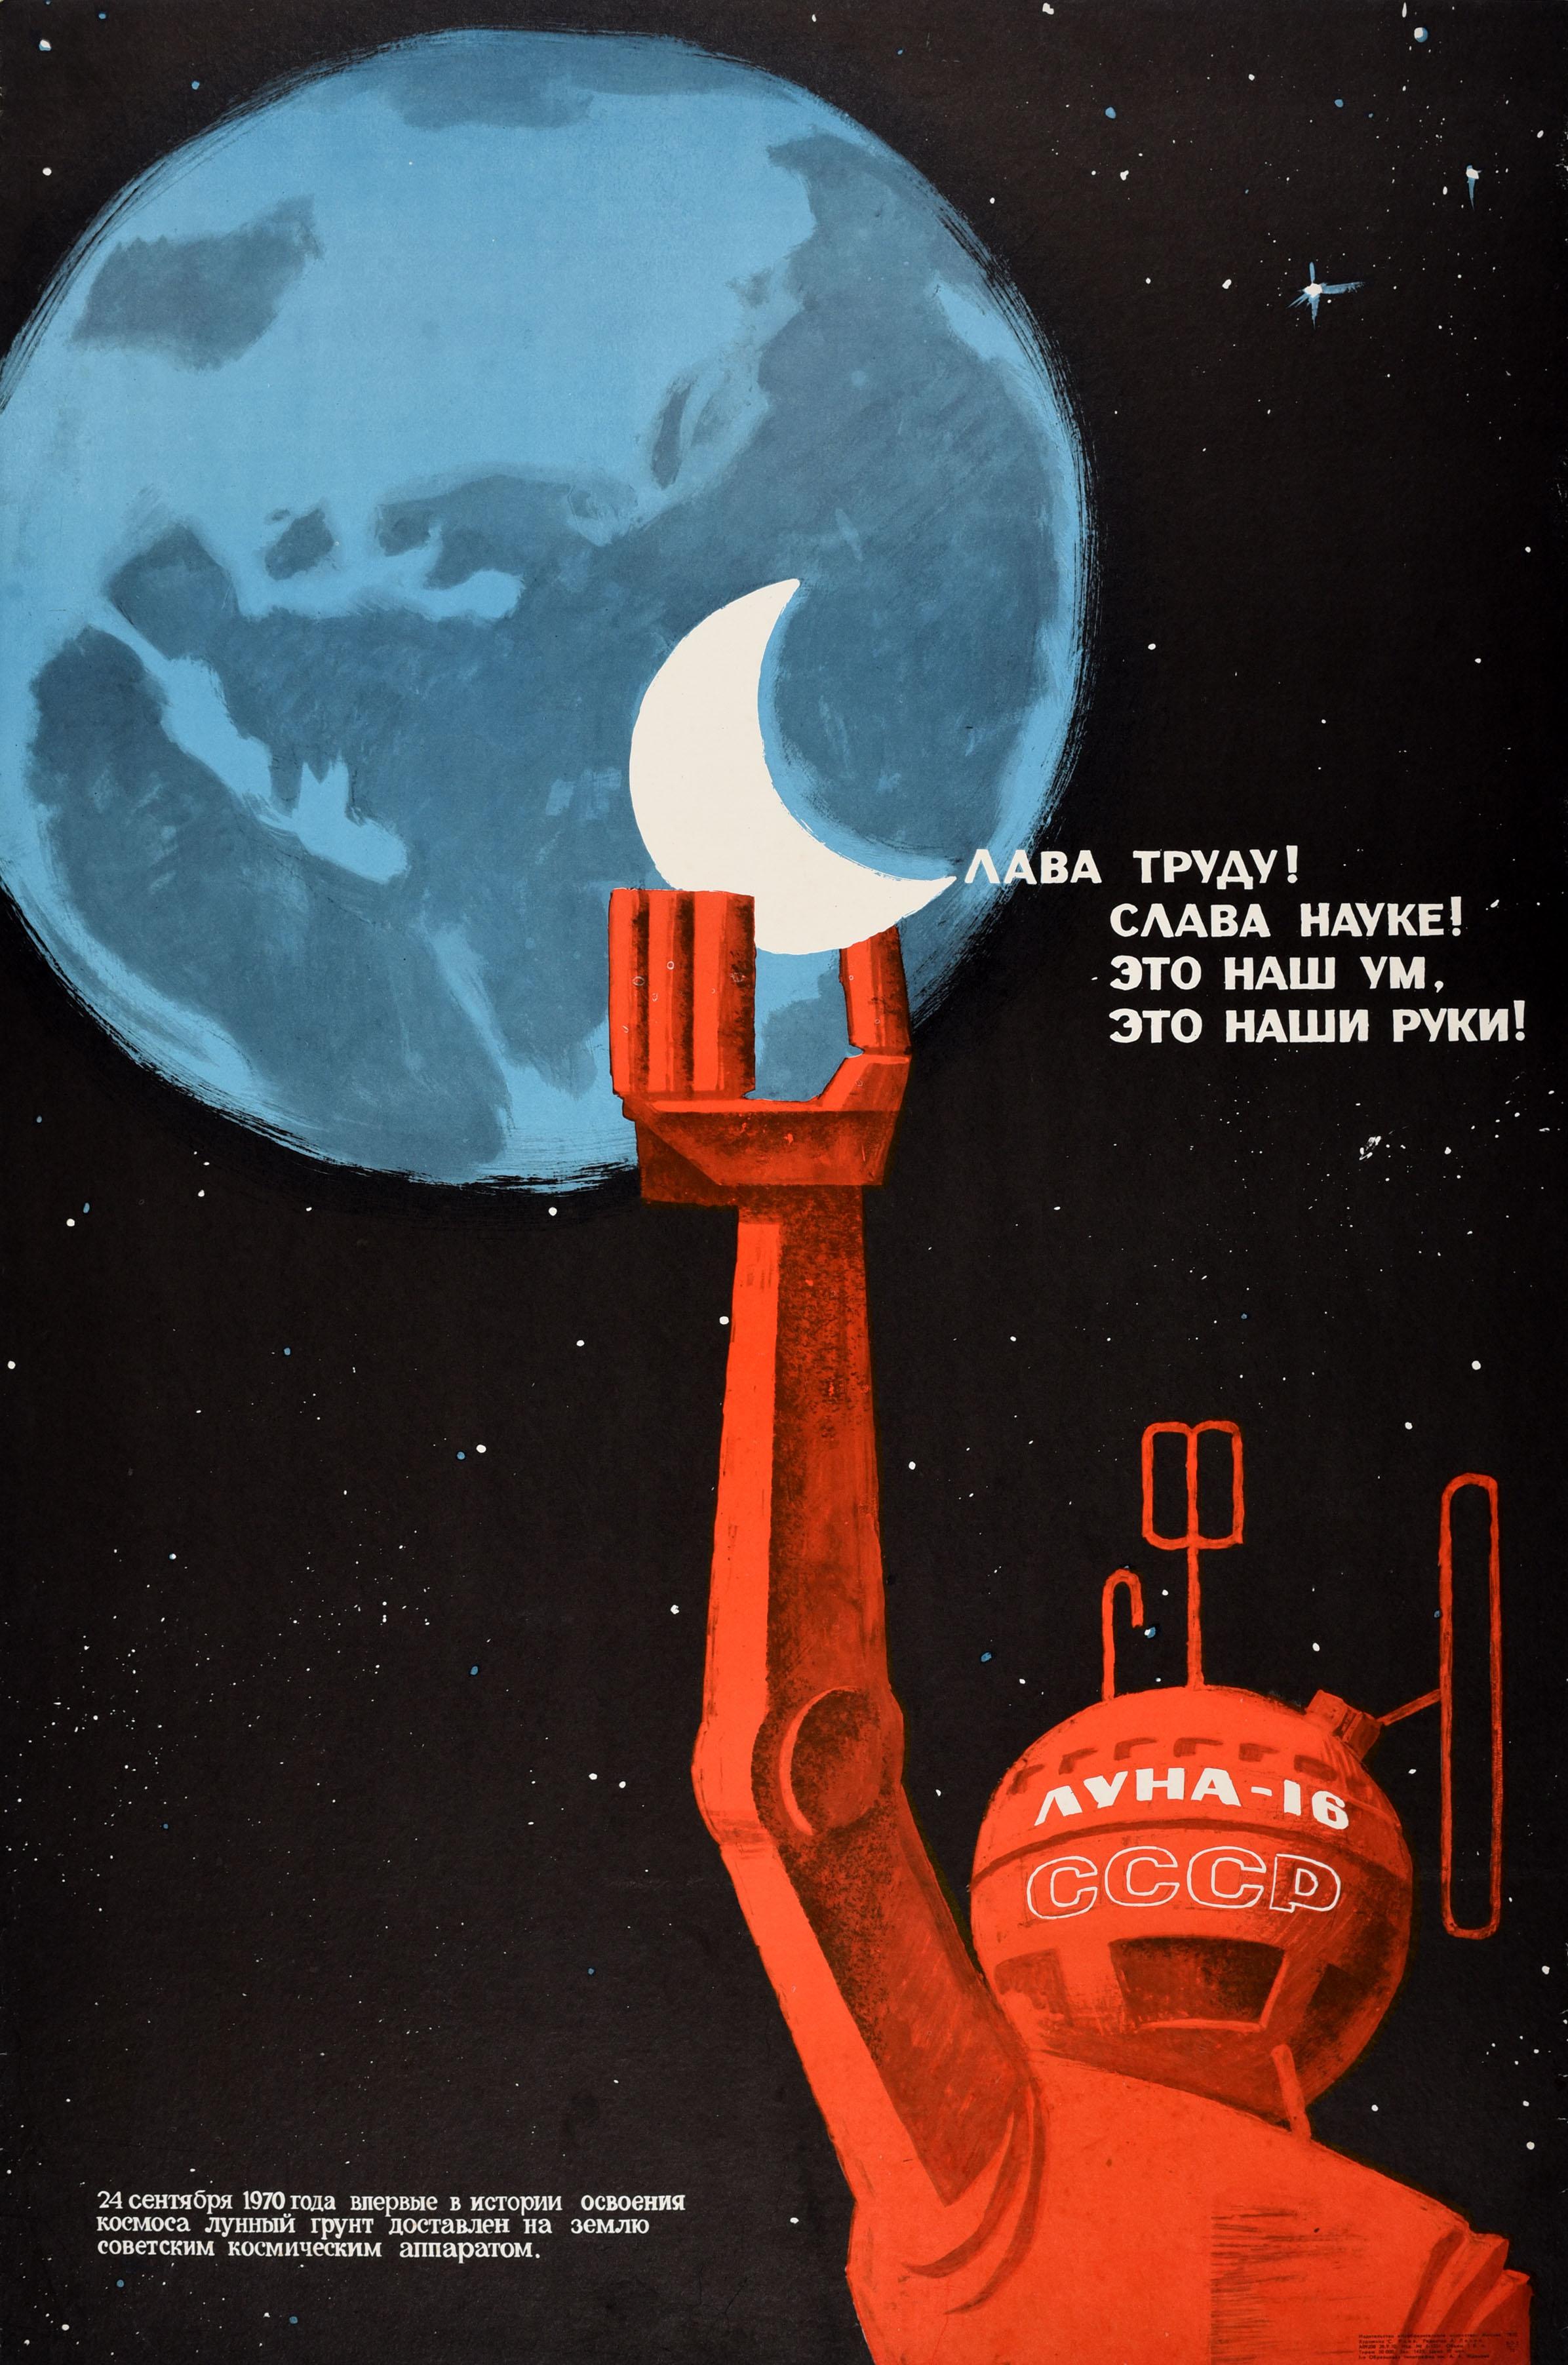 S. Raev Print - Original Vintage Poster Space Robot Probe Soviet Science Luna 16 USSR Moon Earth